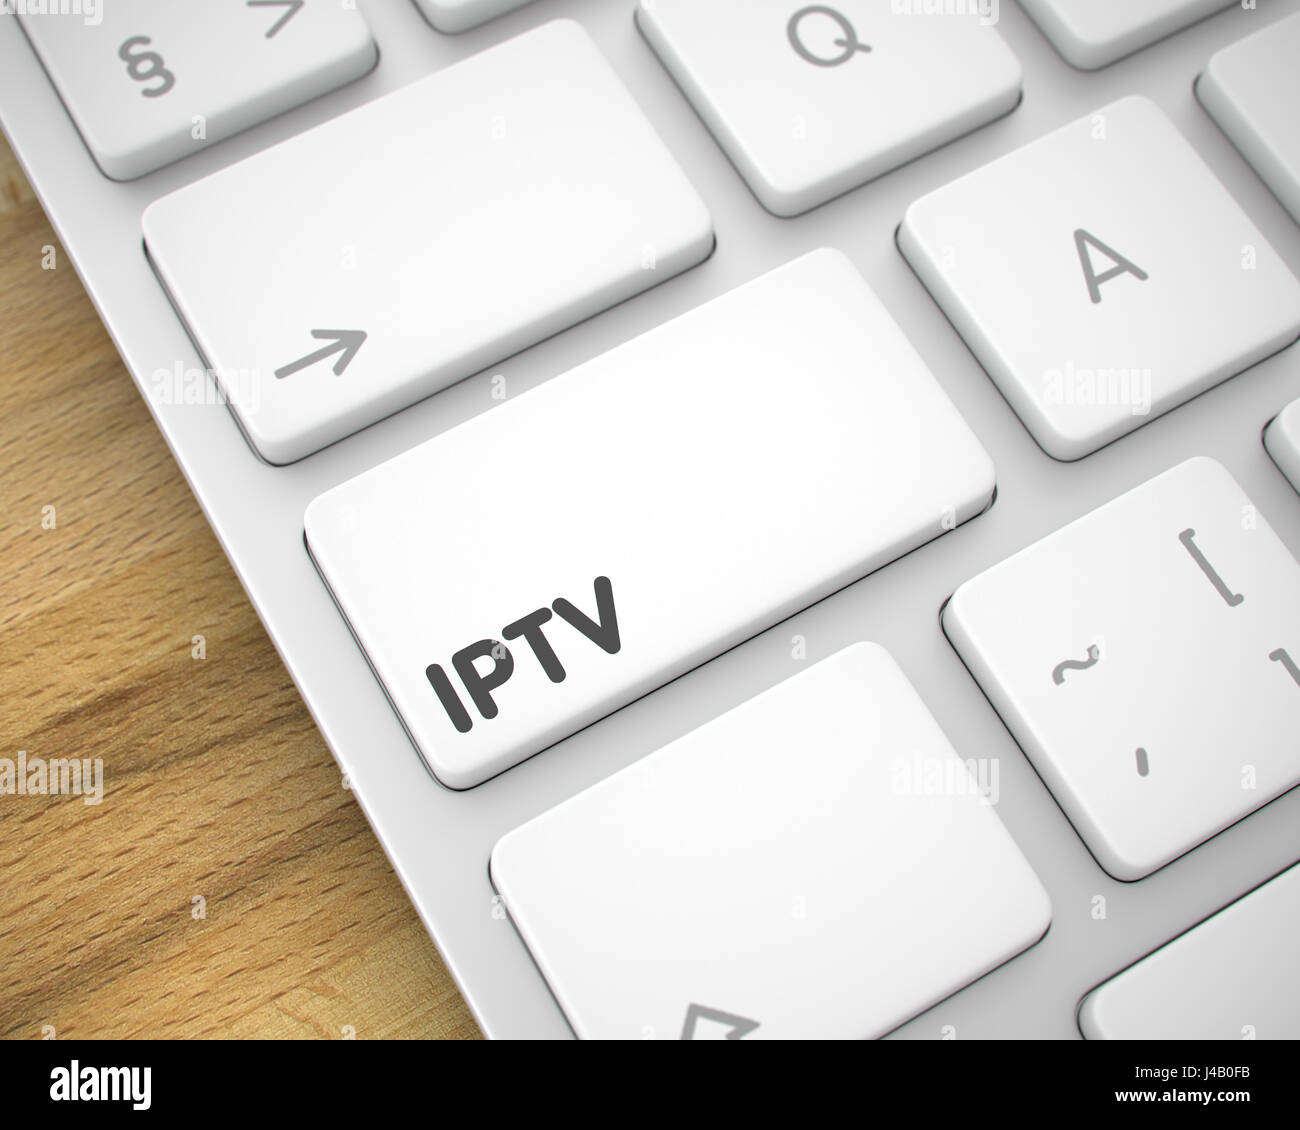 IPTV - Inscription on White Keyboard Button. 3D. Stock Photo